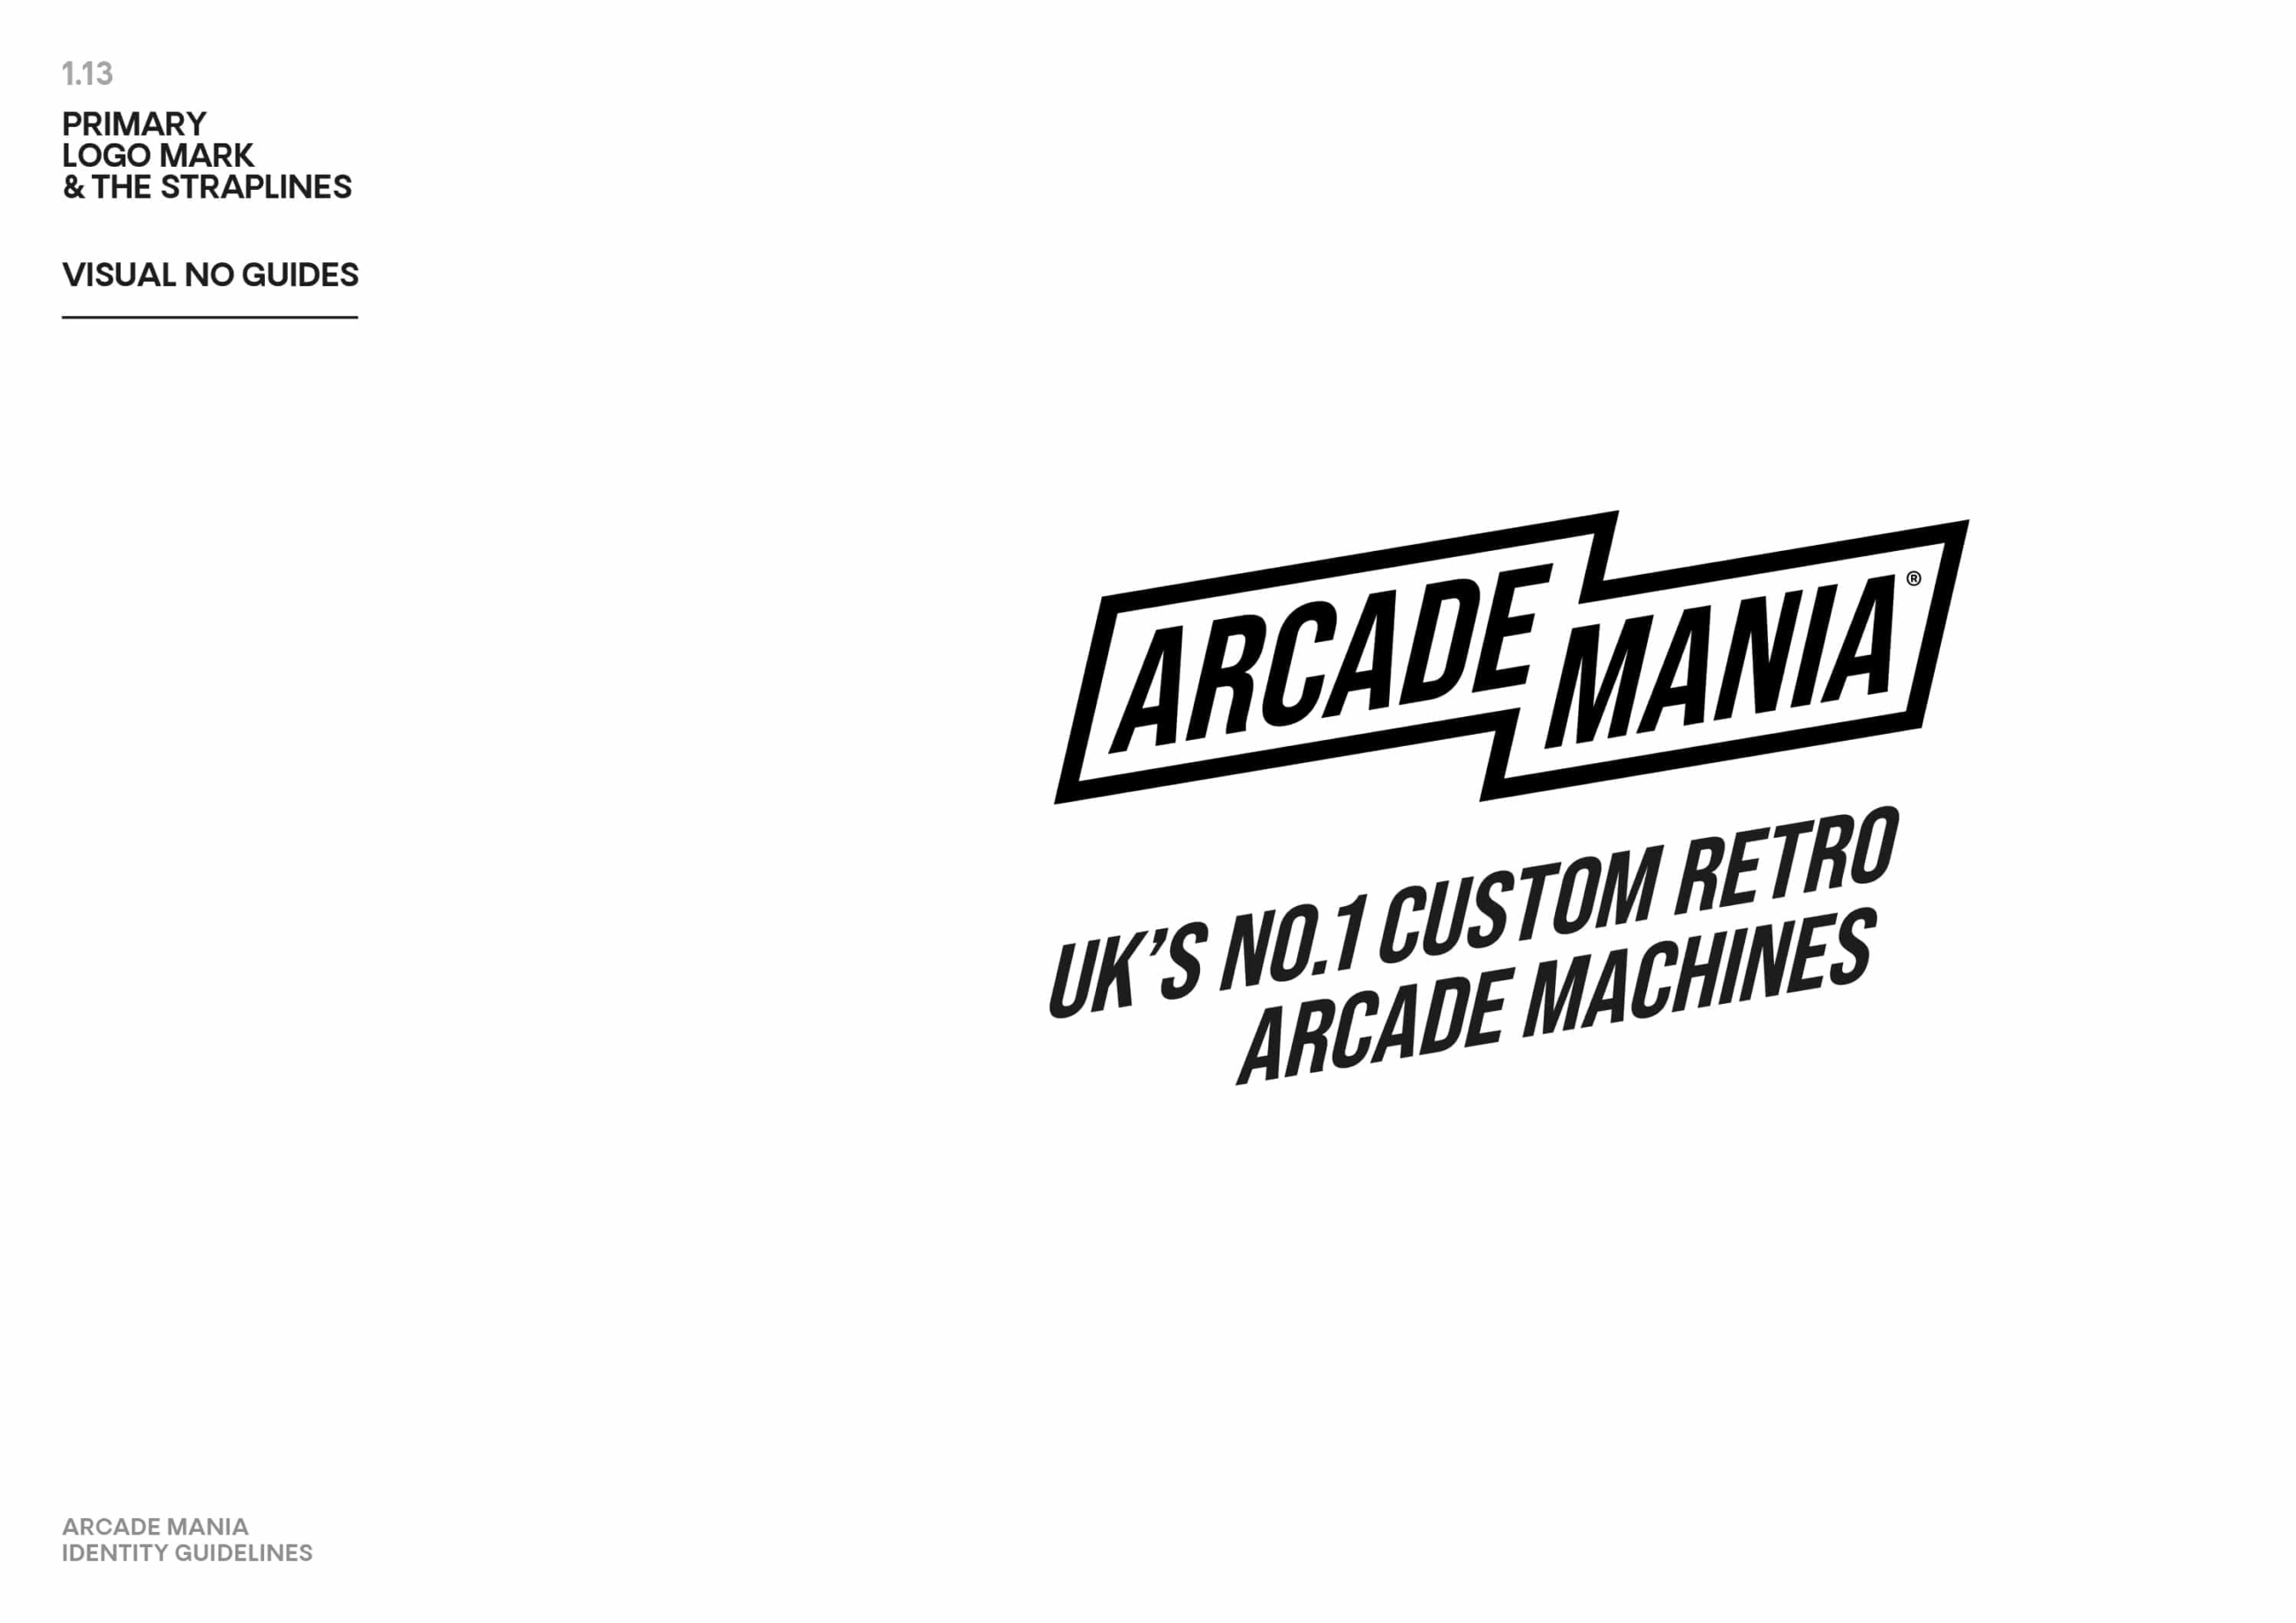 arcade mania brand guidelines m 14